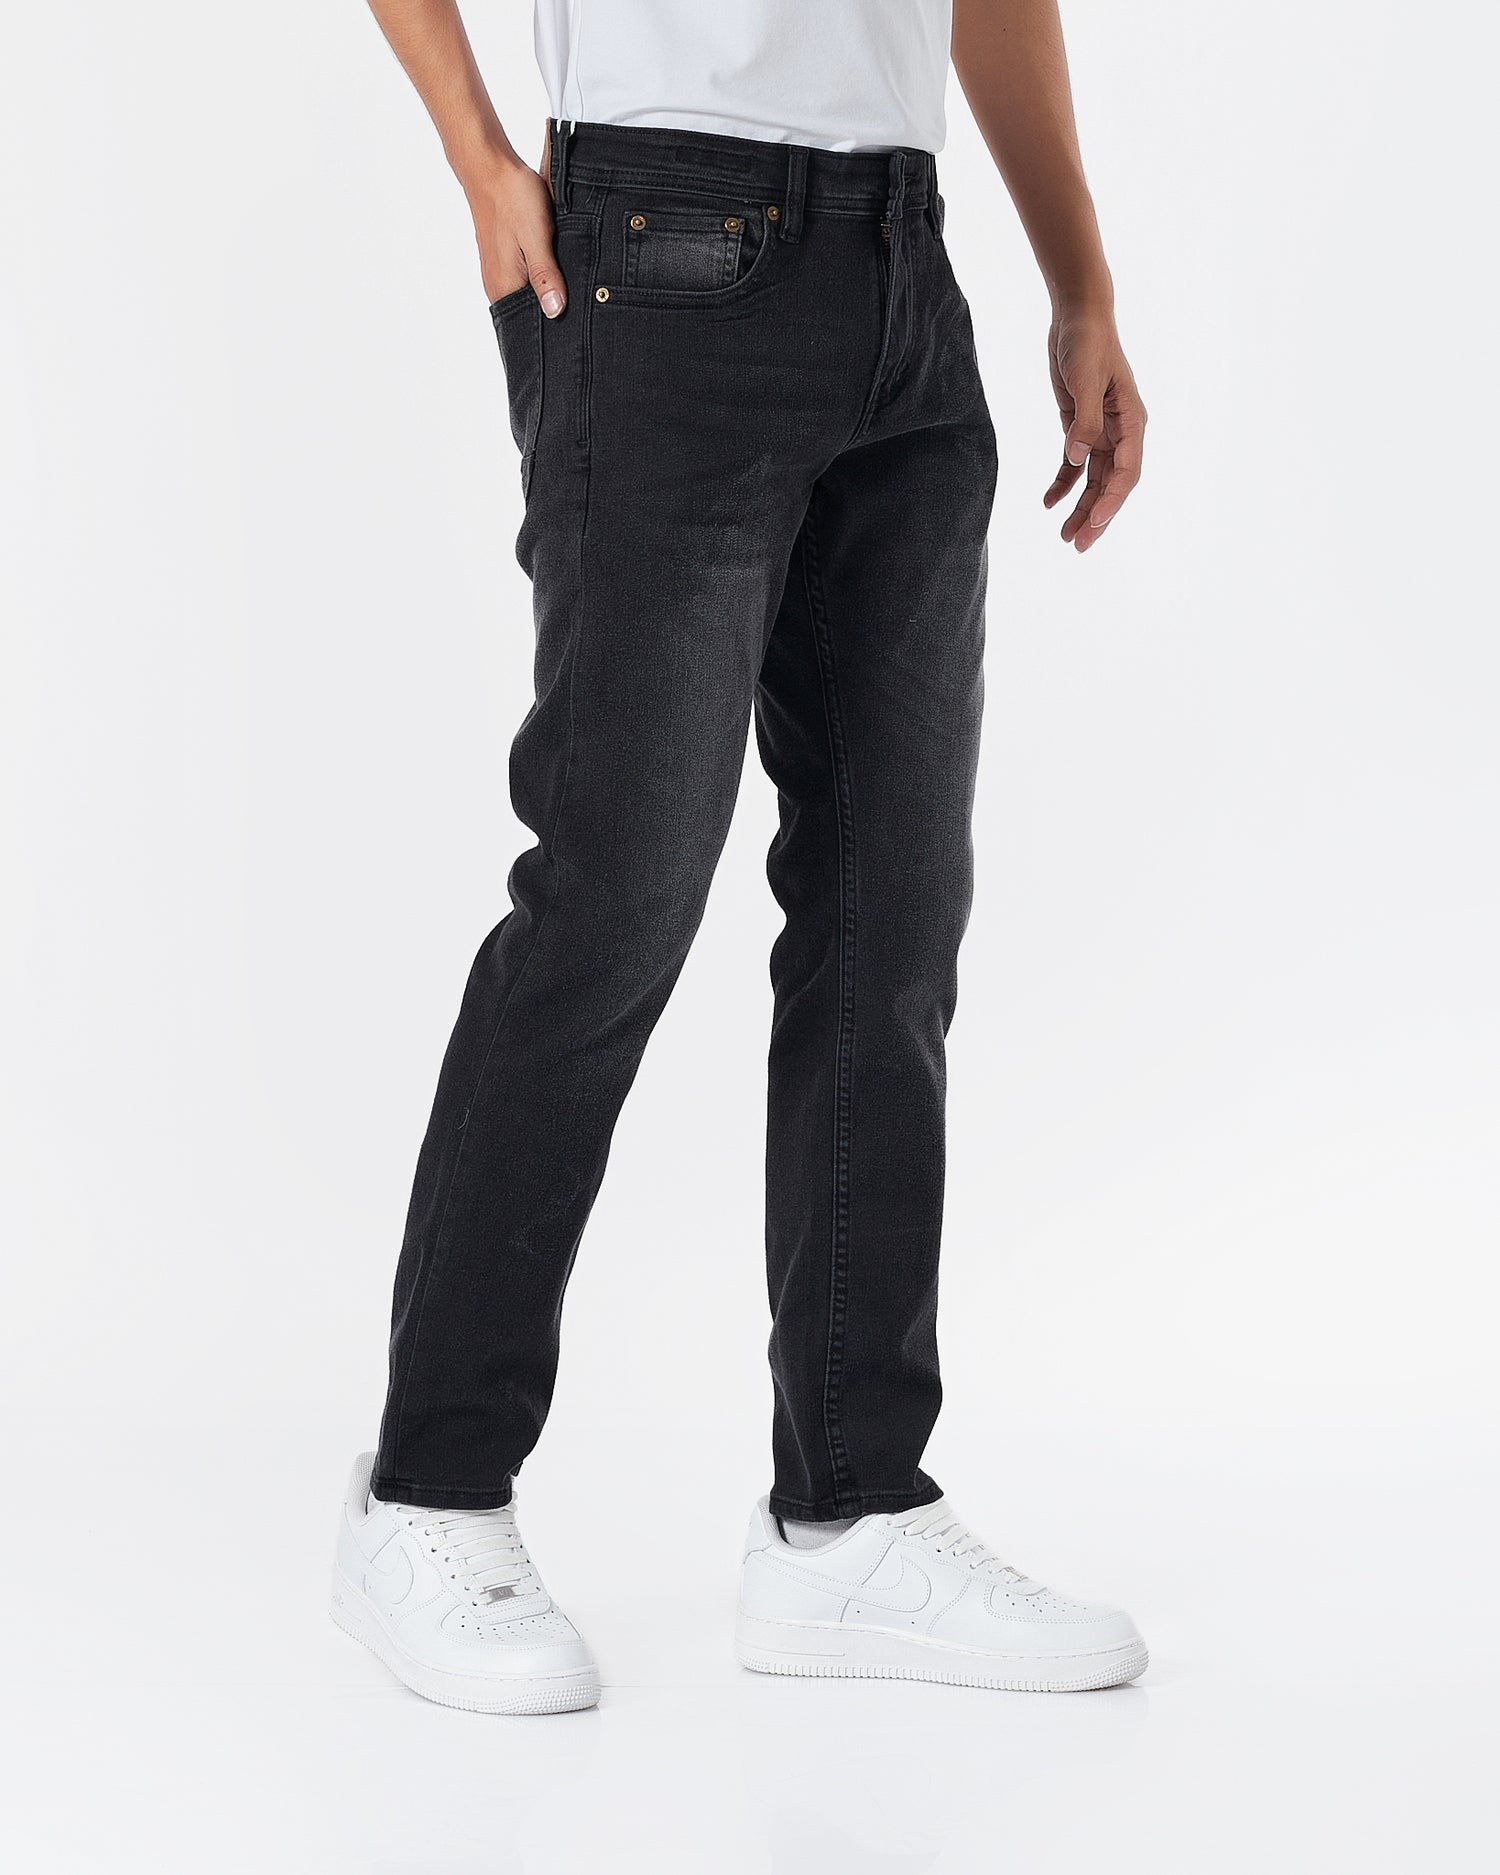 TH Men Charcoal Slim Fit Jeans 24.90